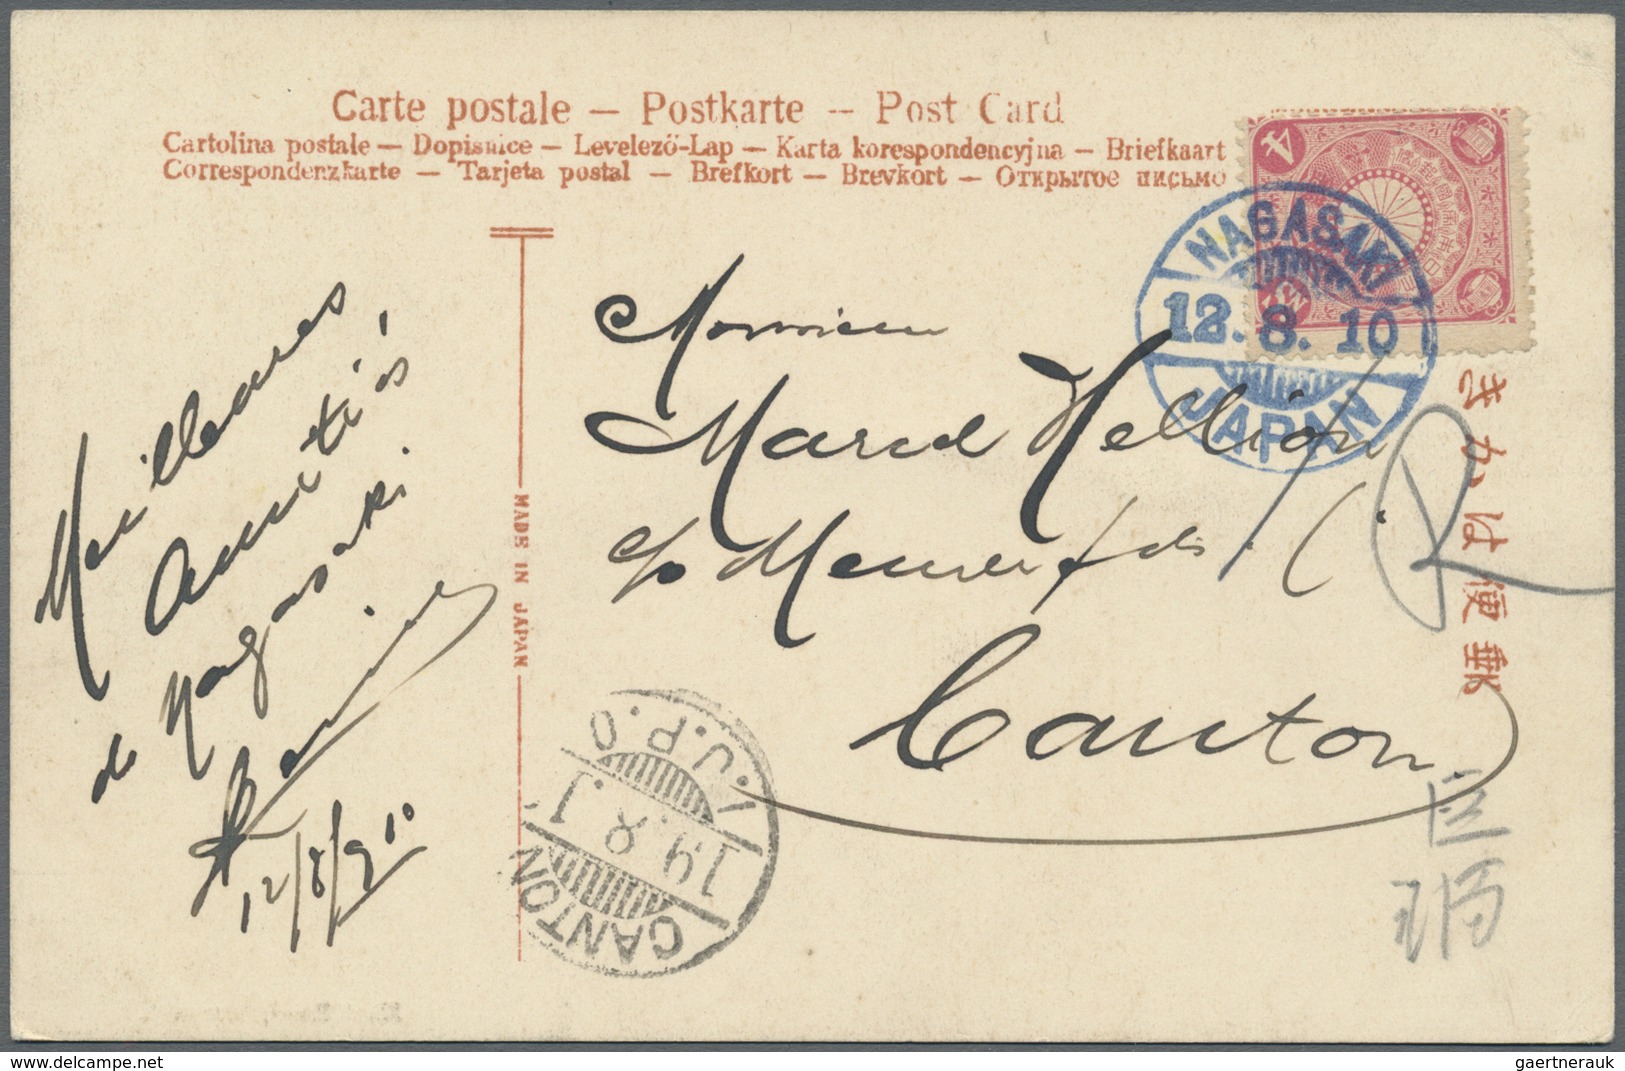 Br/Brfst Japan: 1902/1948: Very fine lot of 22 envelopes, picture postcards and postal stationeries including